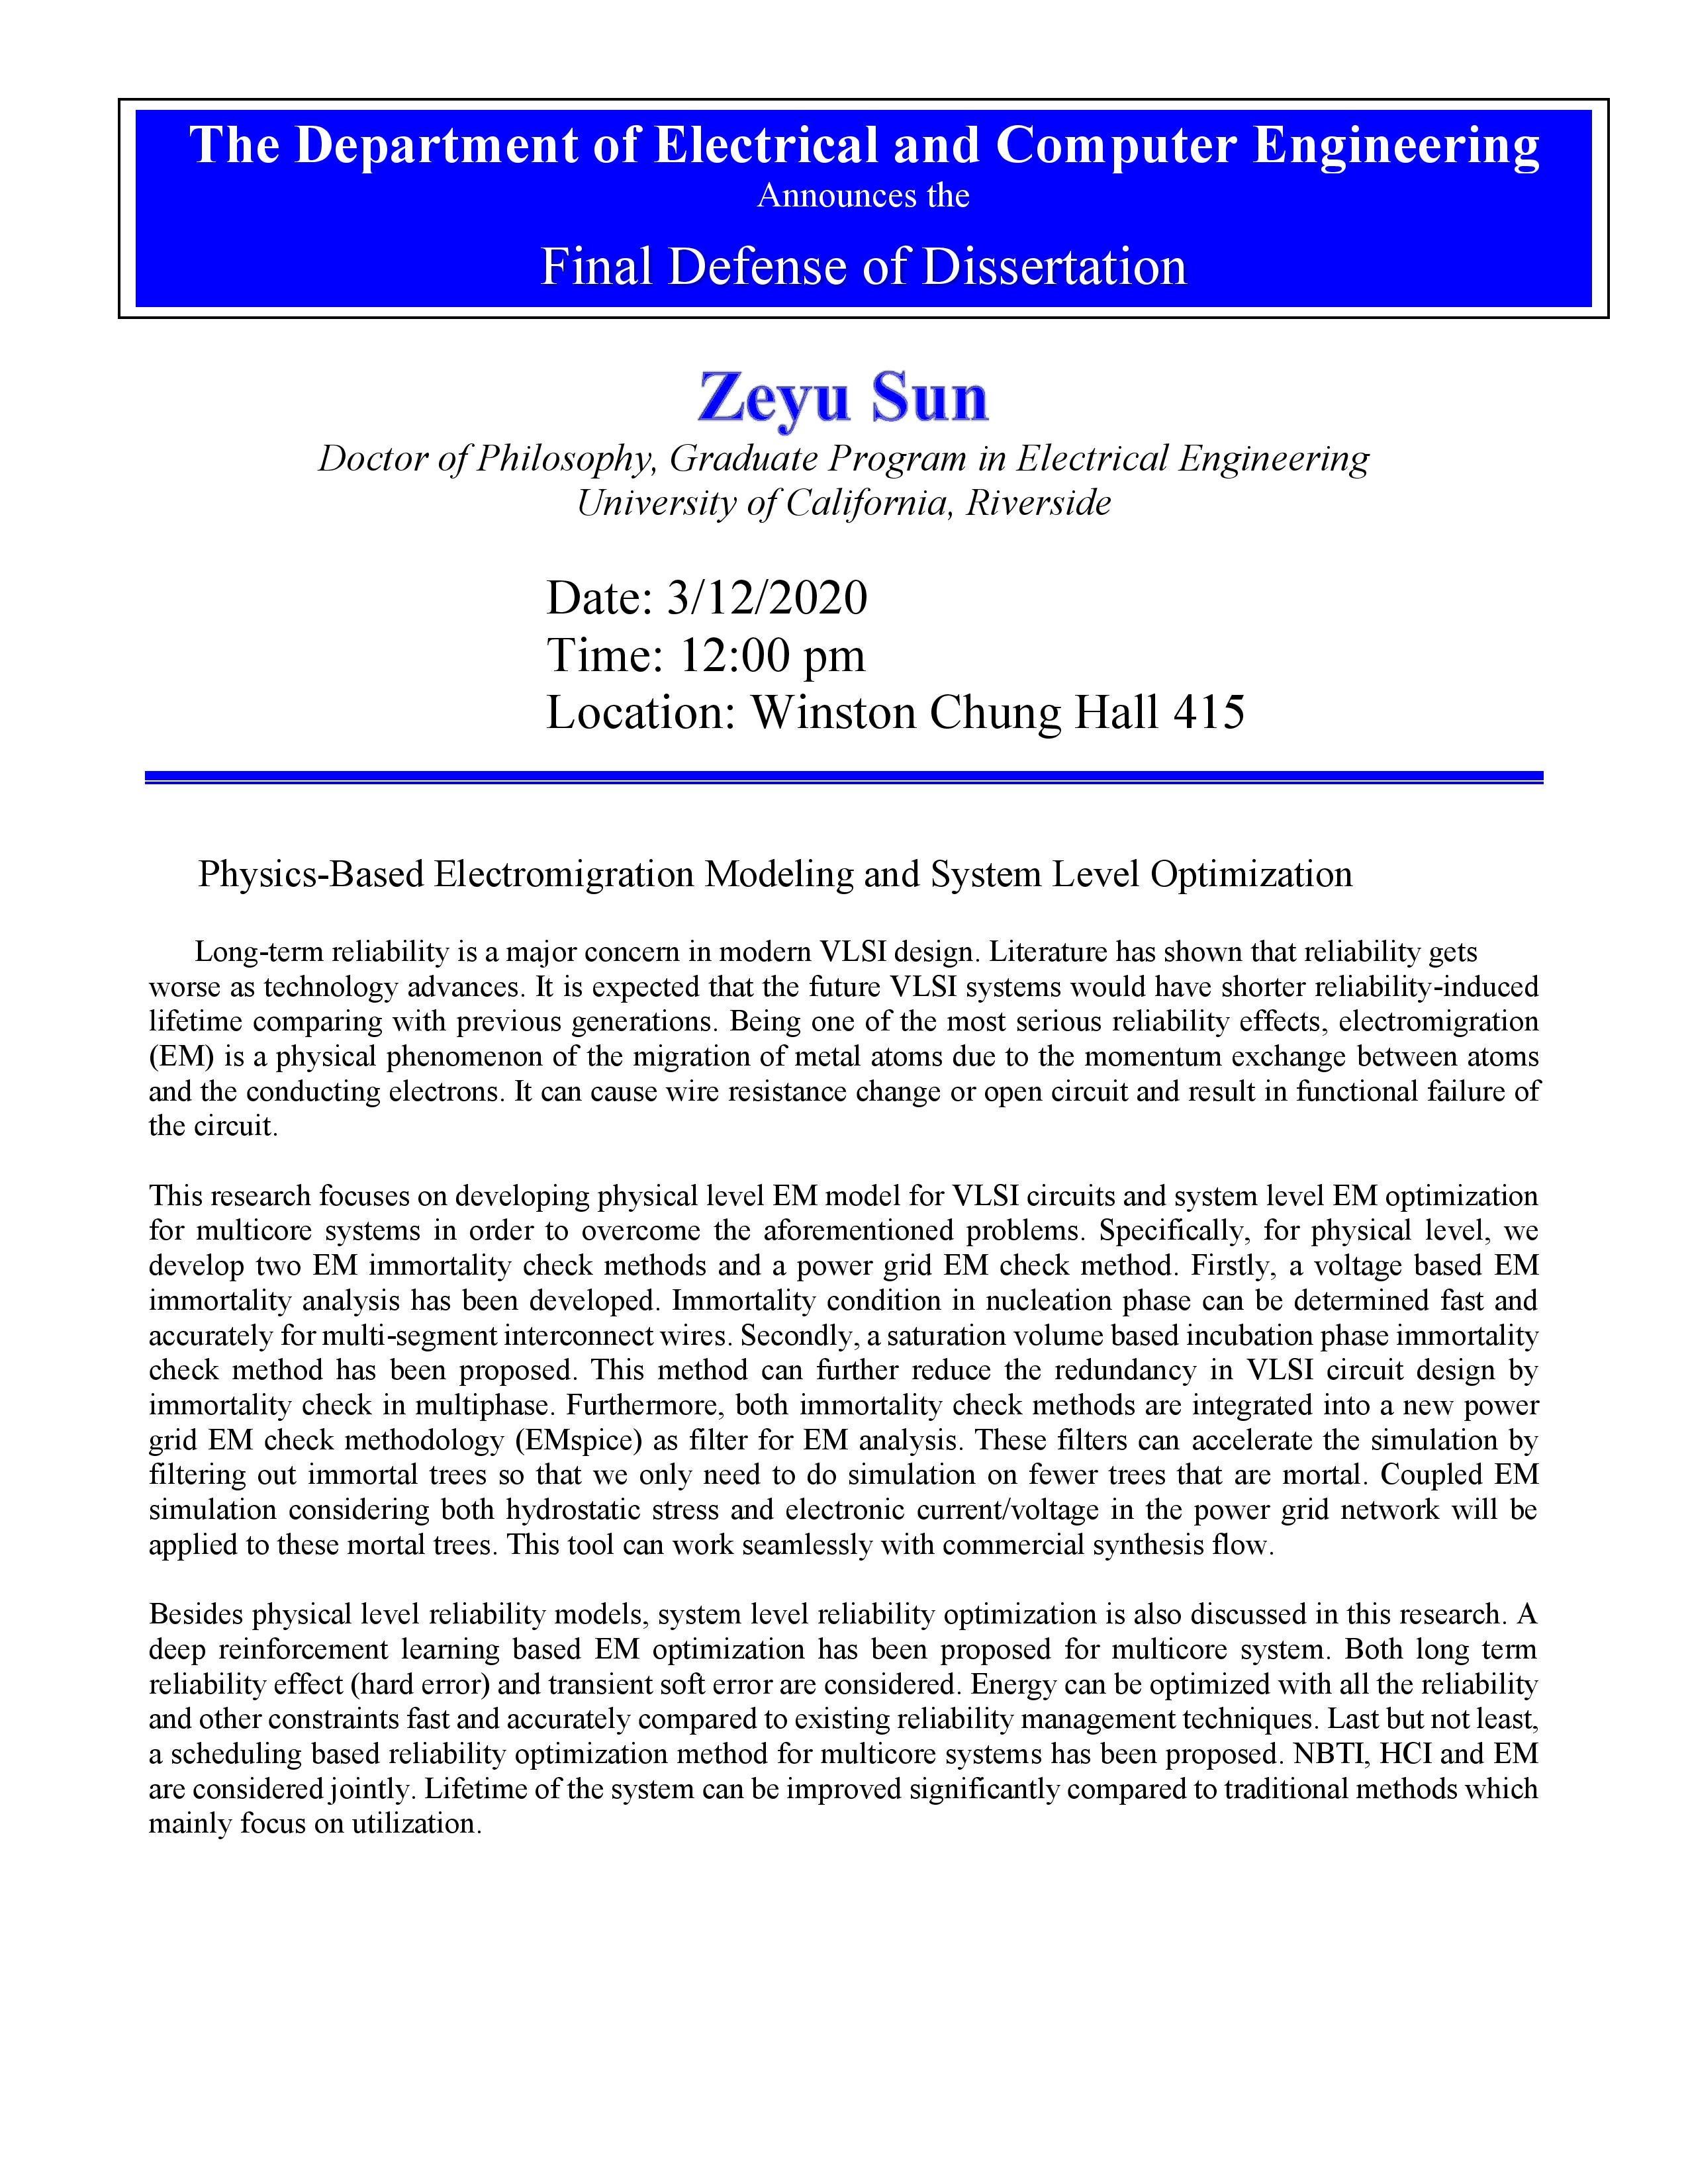 SUN, Zeyu PhD Dissertation Defense Flyer